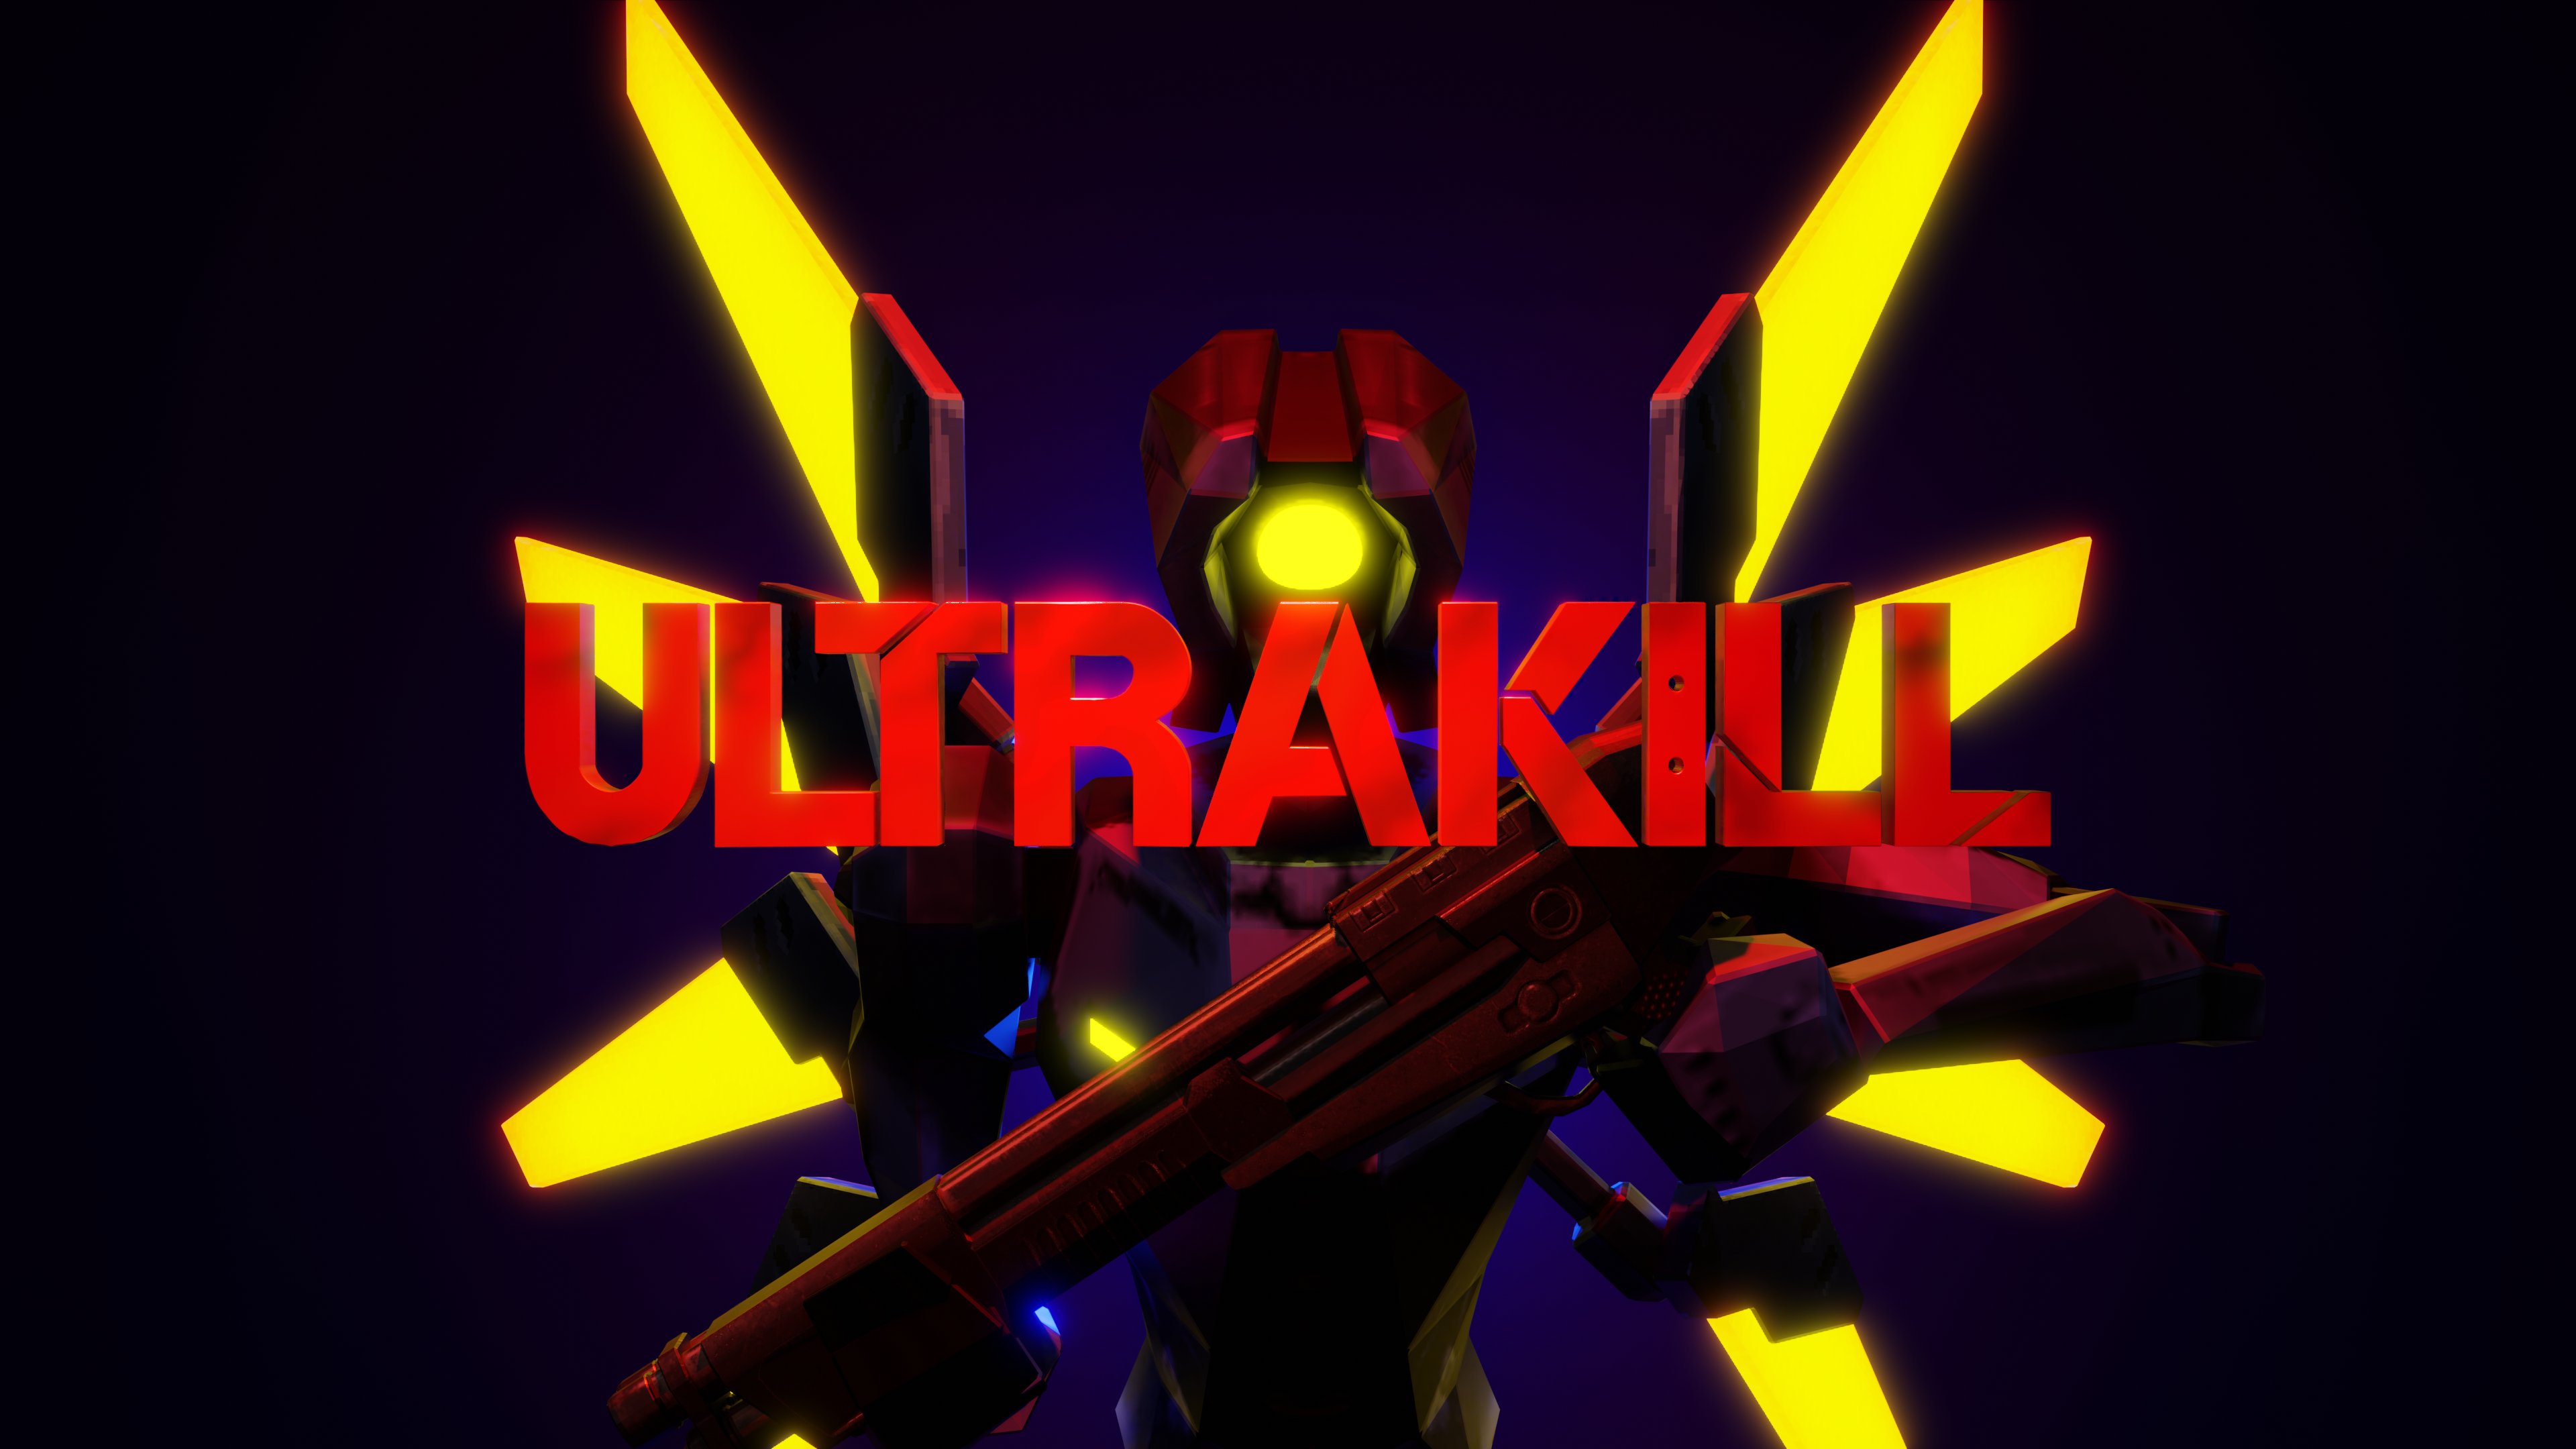 Ultrakill 4k Wallpaper i made in Blender (i'm still learning 3D). What do you think?: Ultrakill